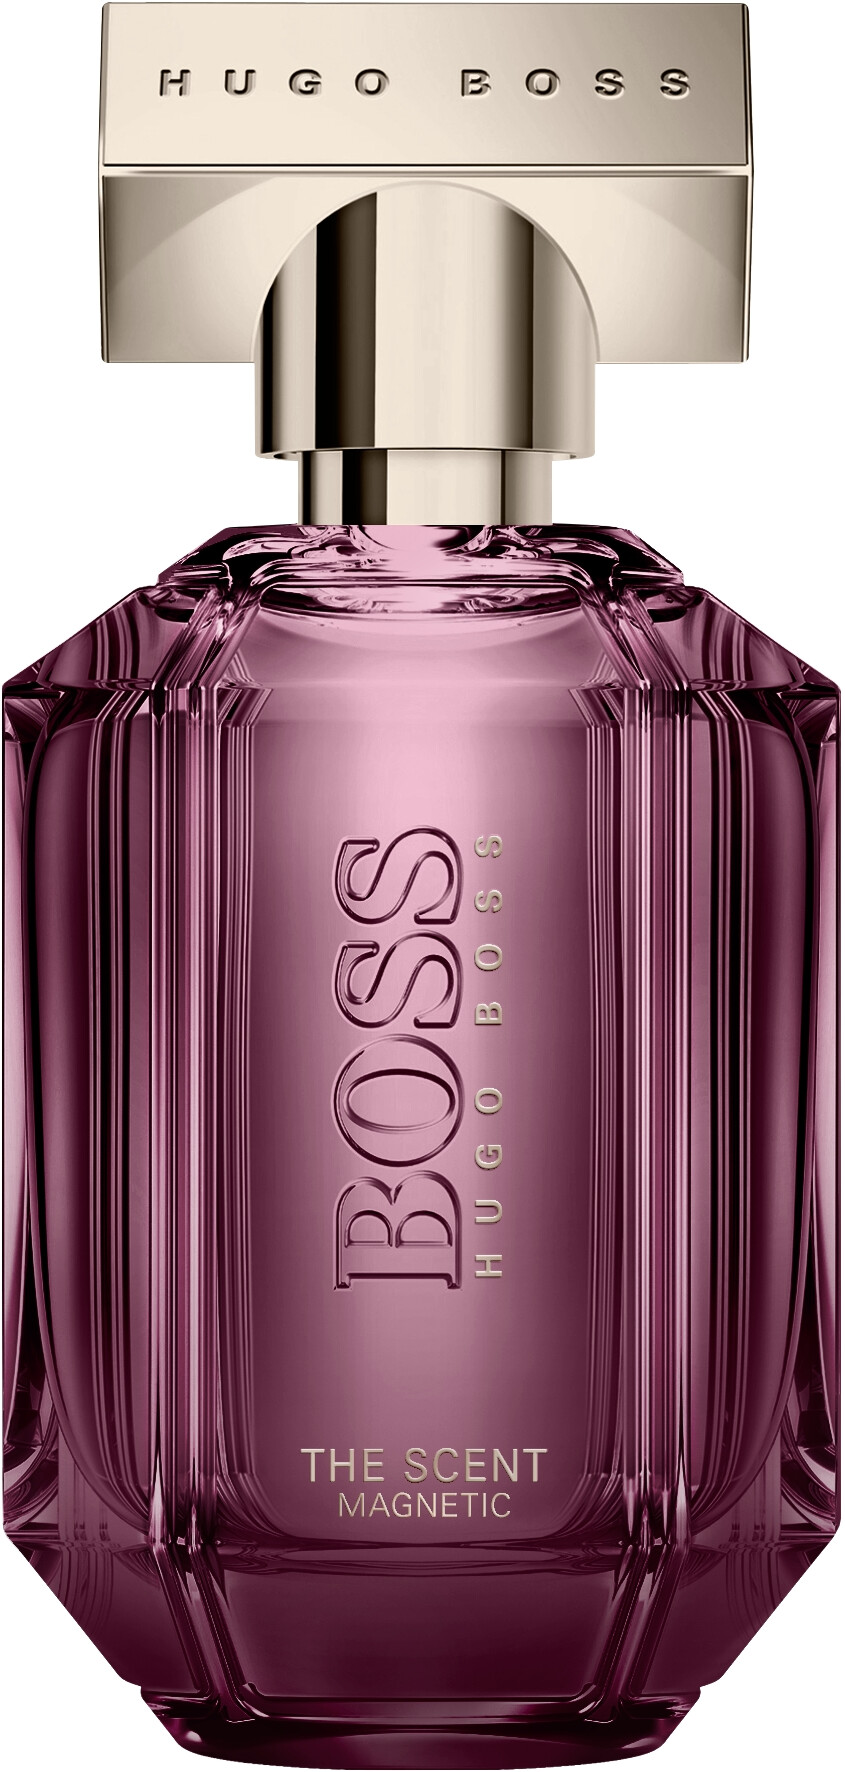 HUGO BOSS BOSS The Scent For Her Magnetic Eau de Parfum Spray 50ml